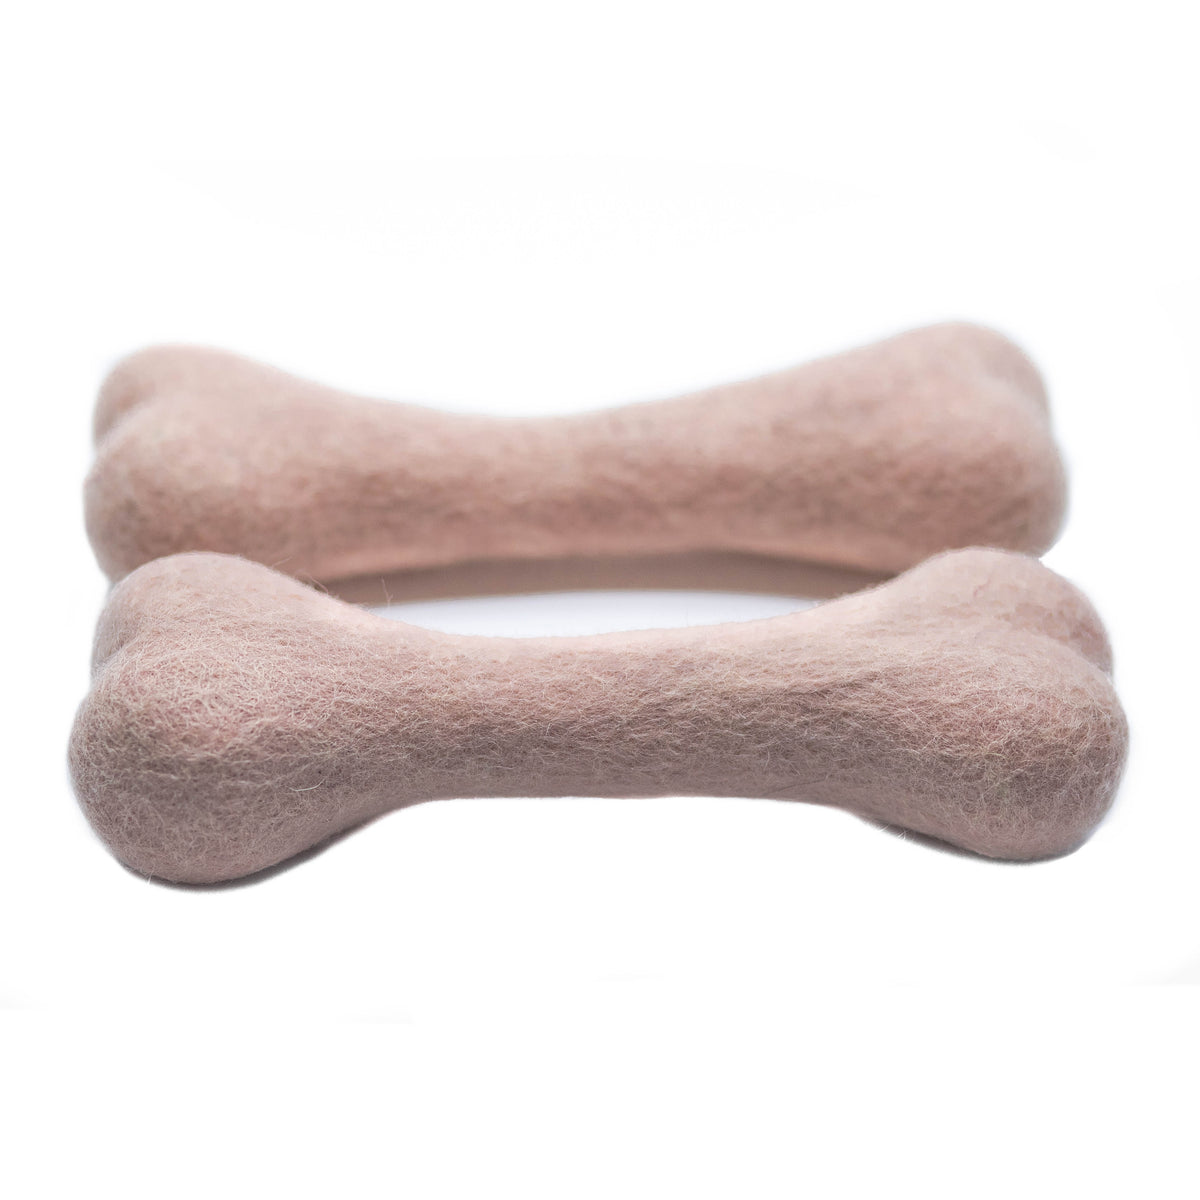 Wool Dog Bone Toy - Blush